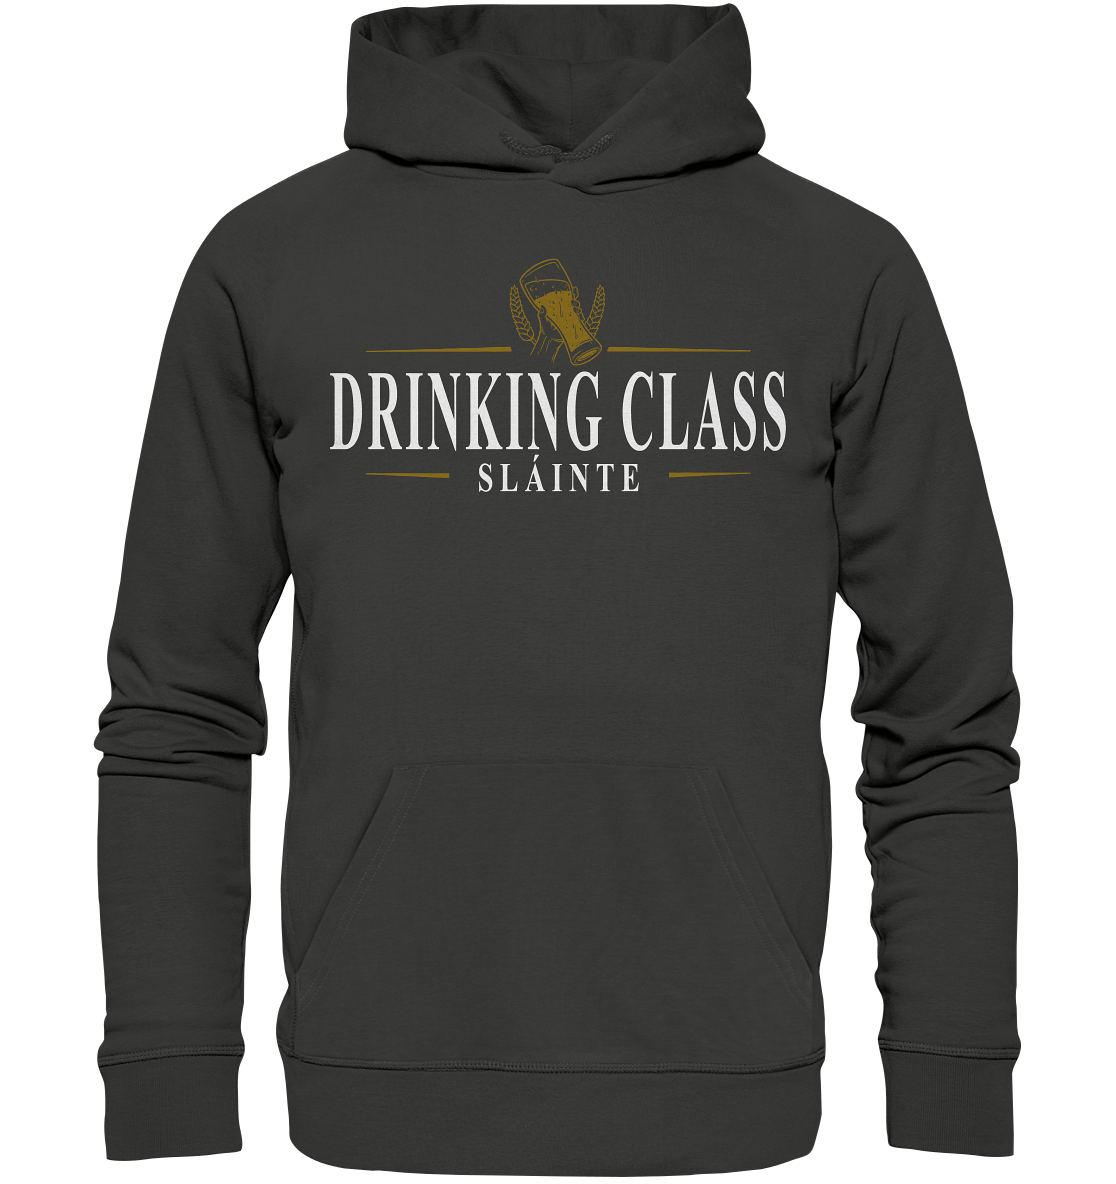 Drinking Class "Sláinte" - Premium Unisex Hoodie